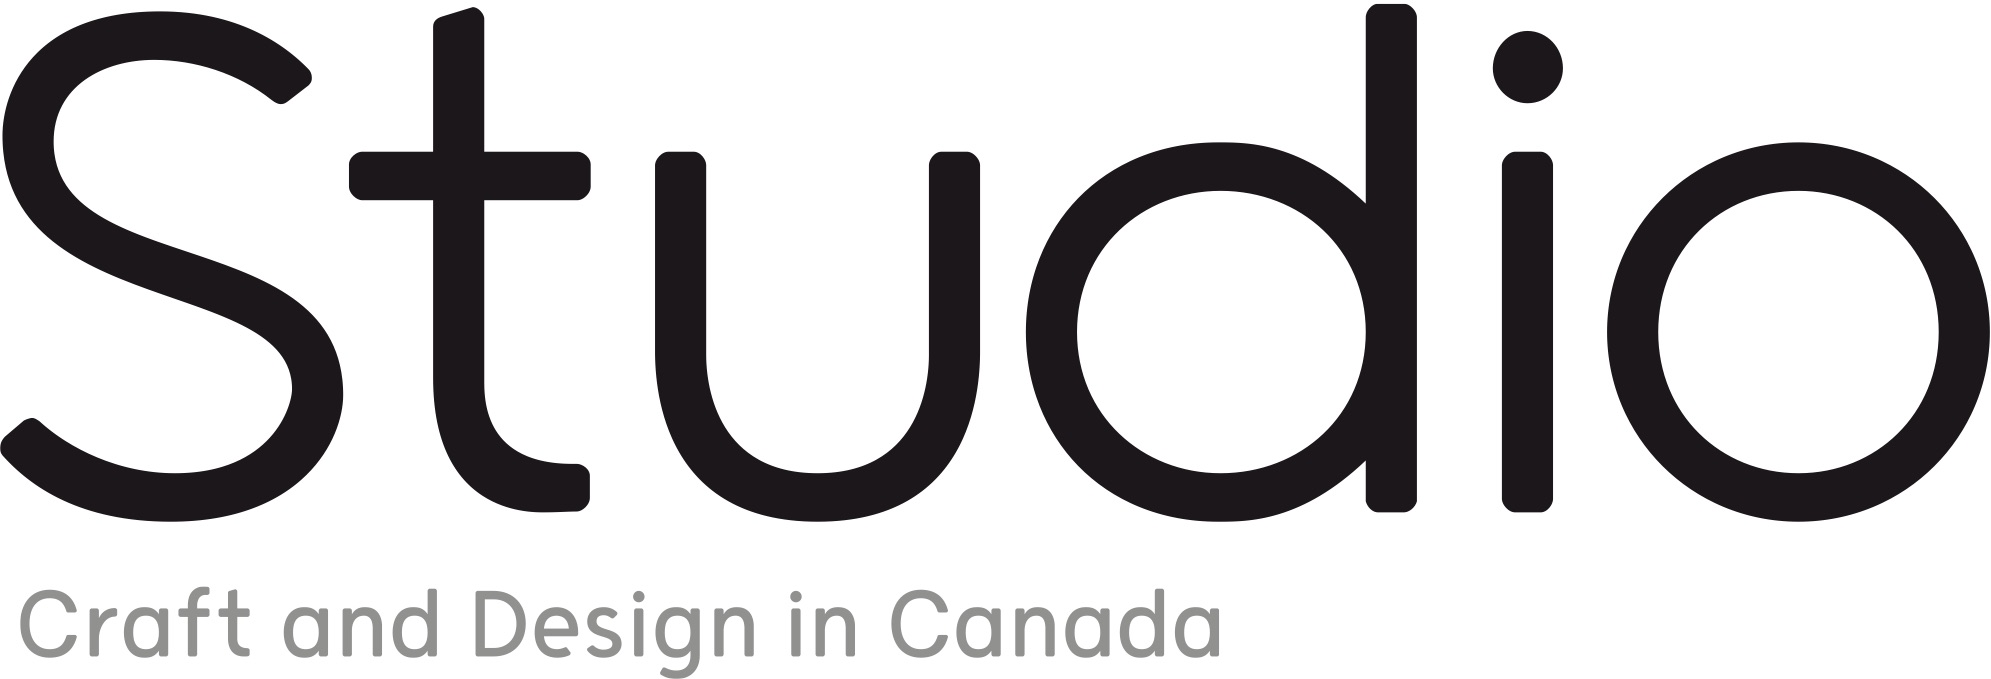 Studio Craft and Design in Canada black on white logo